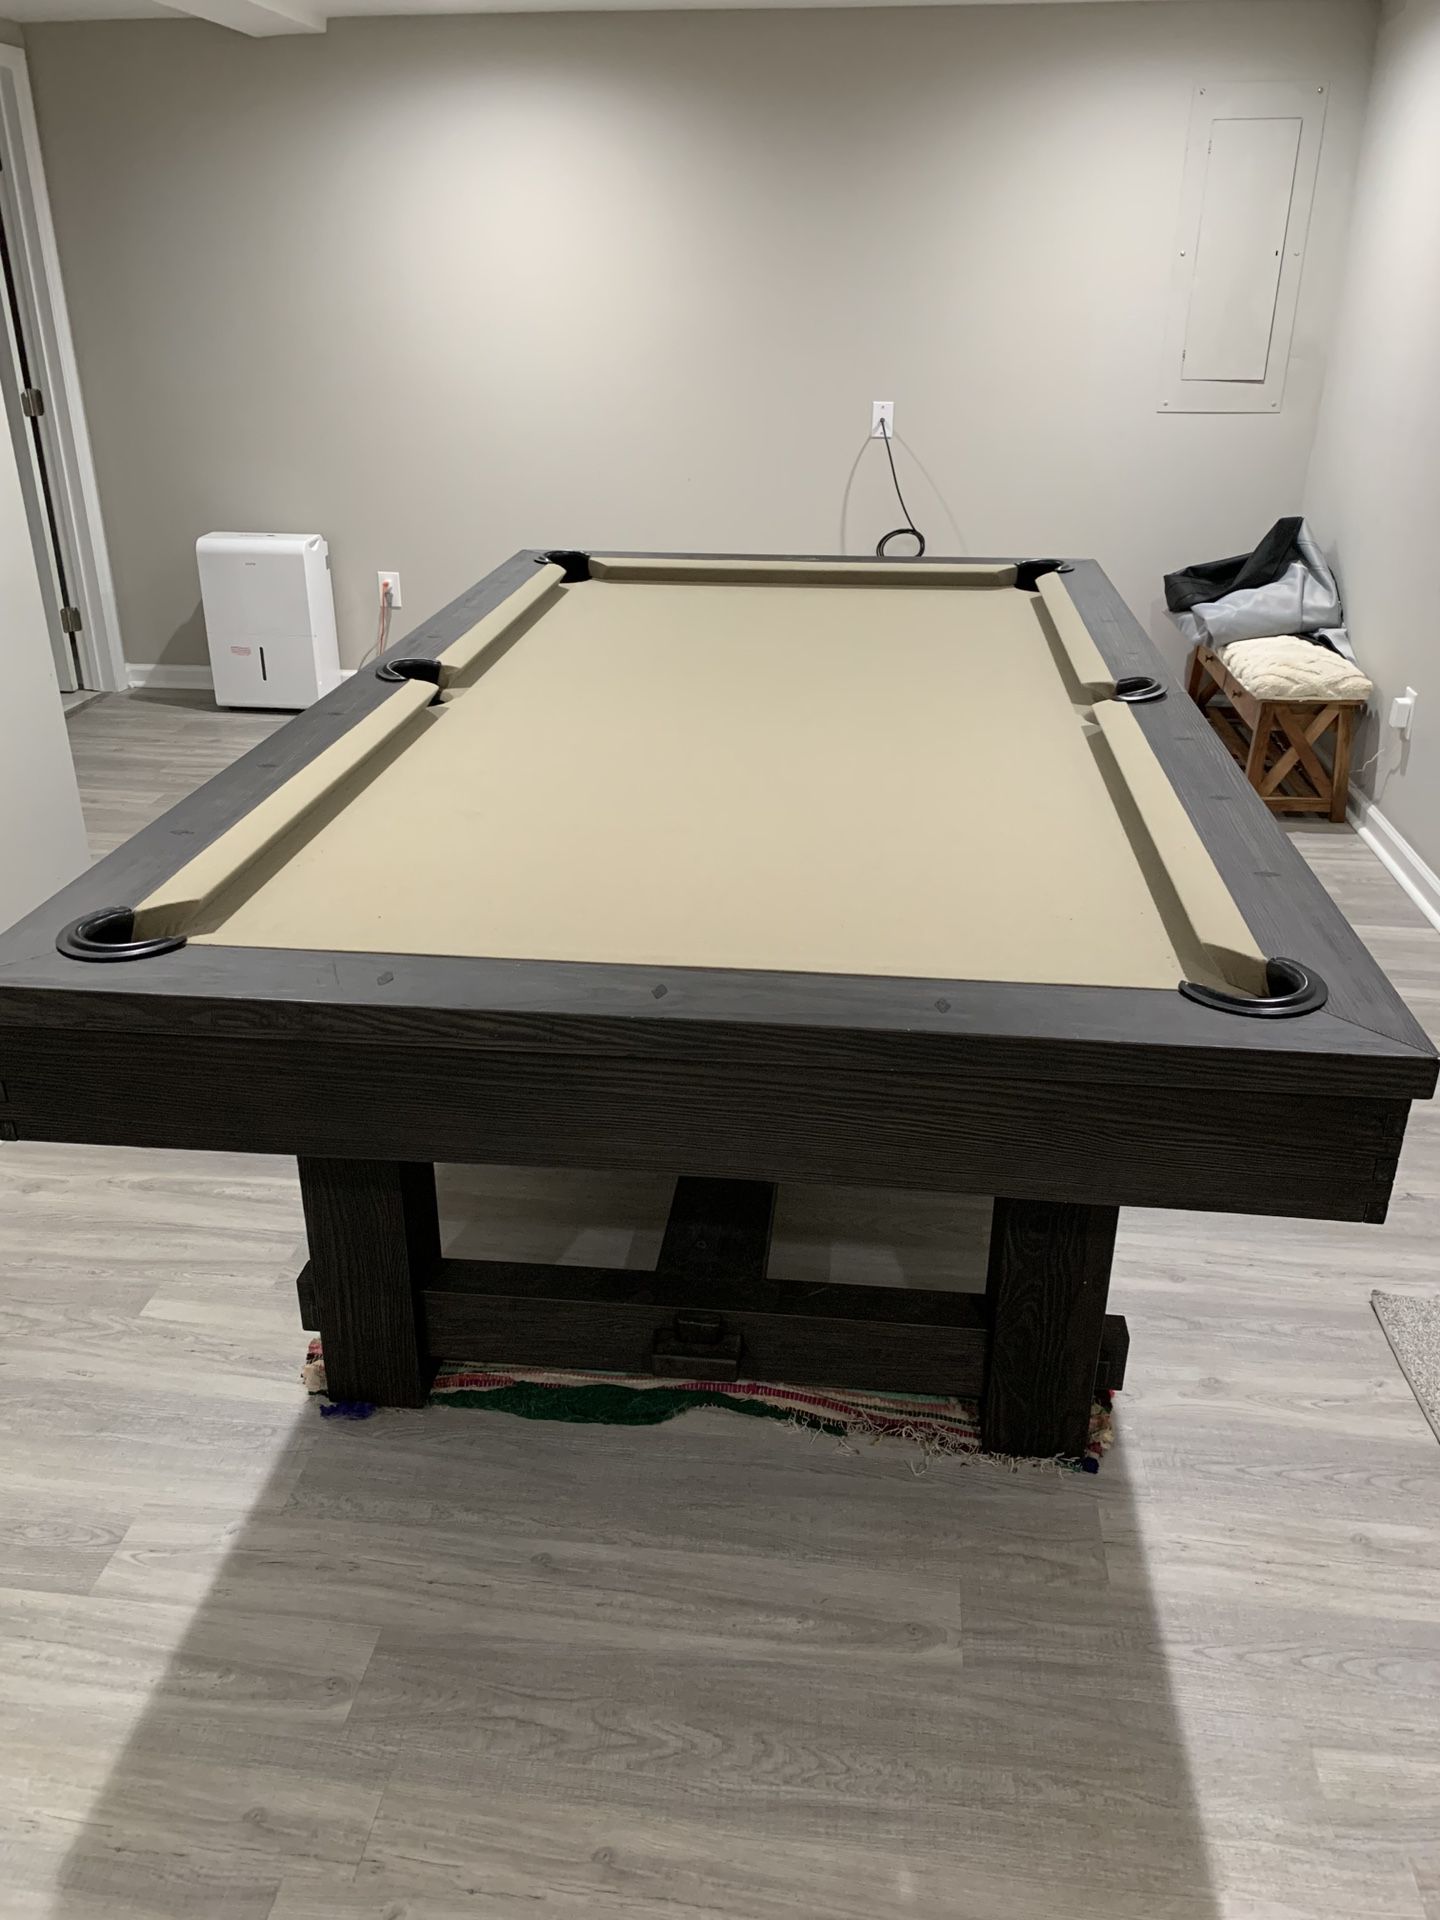 Carlton 8ft Pool Table $1500